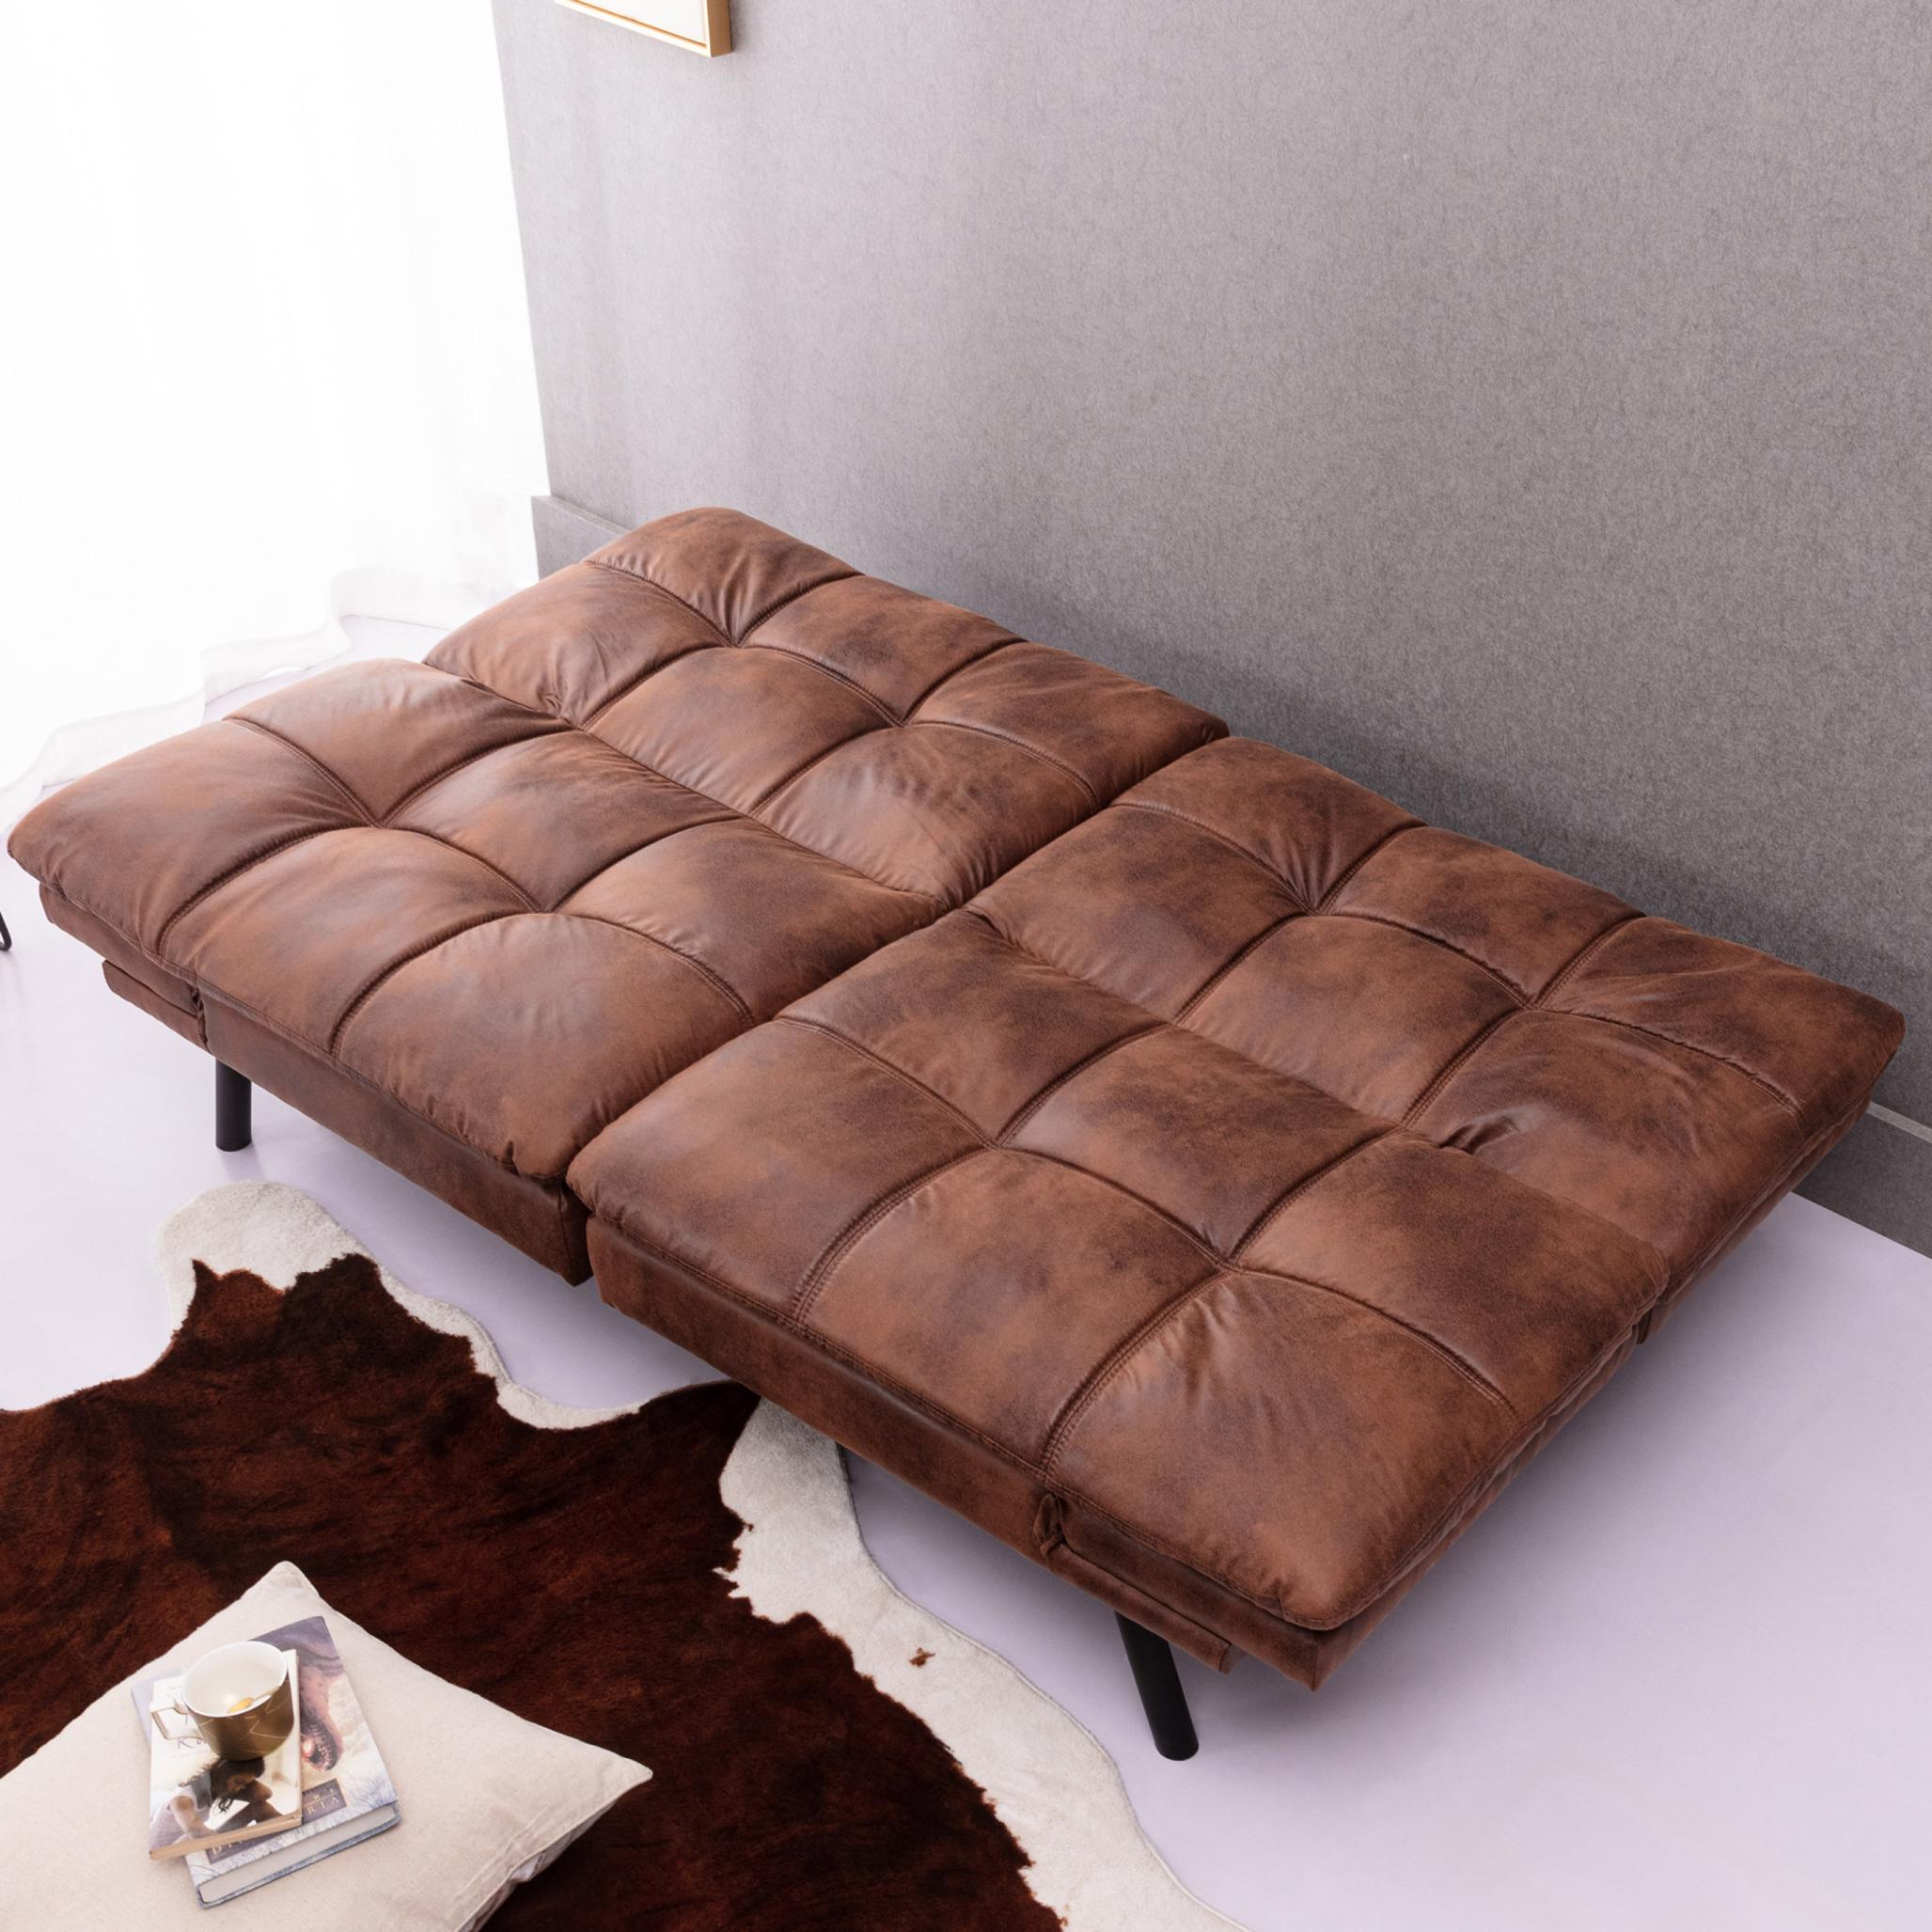 Mydepot Comfortable Armless Sofa Bed